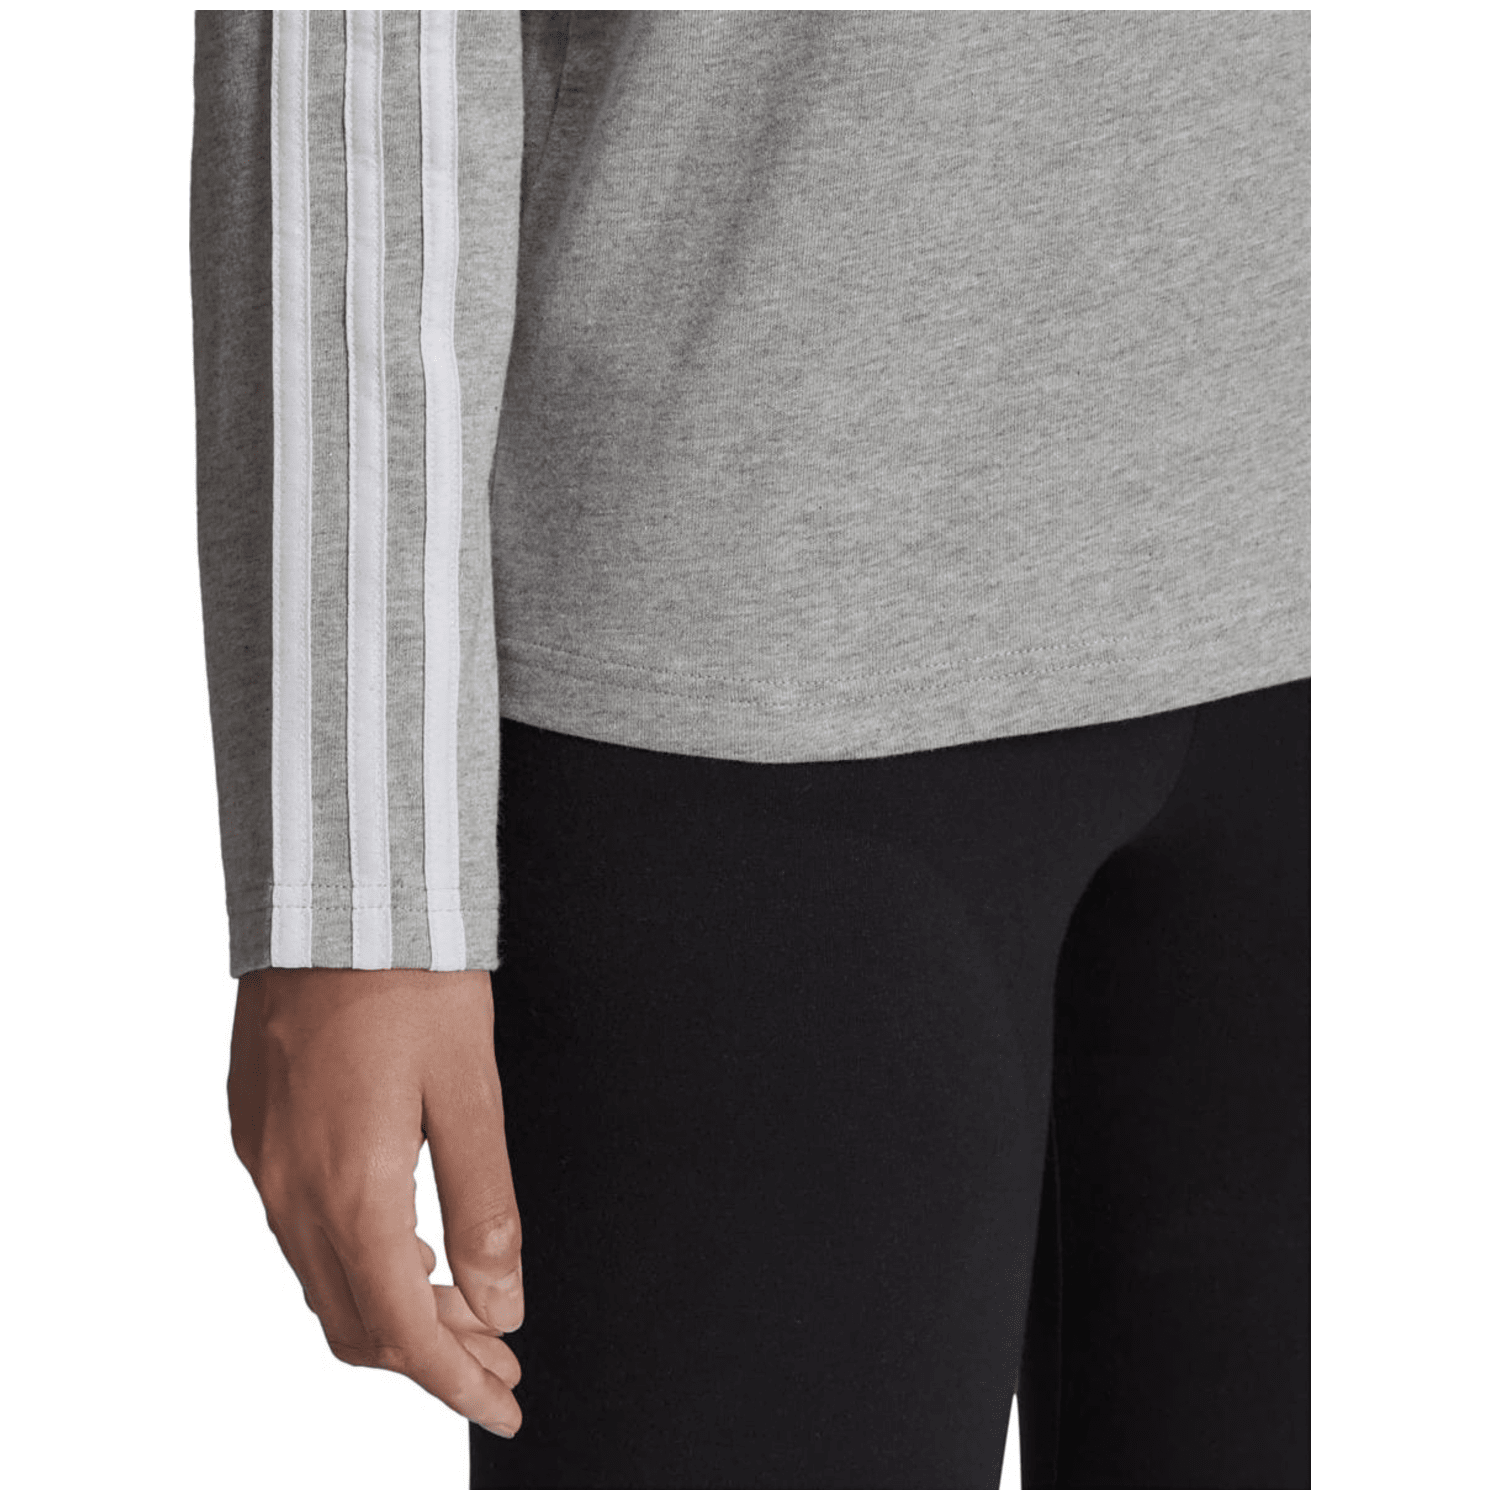 Adidas Essentials 3-Streifen Longsleeve Damen